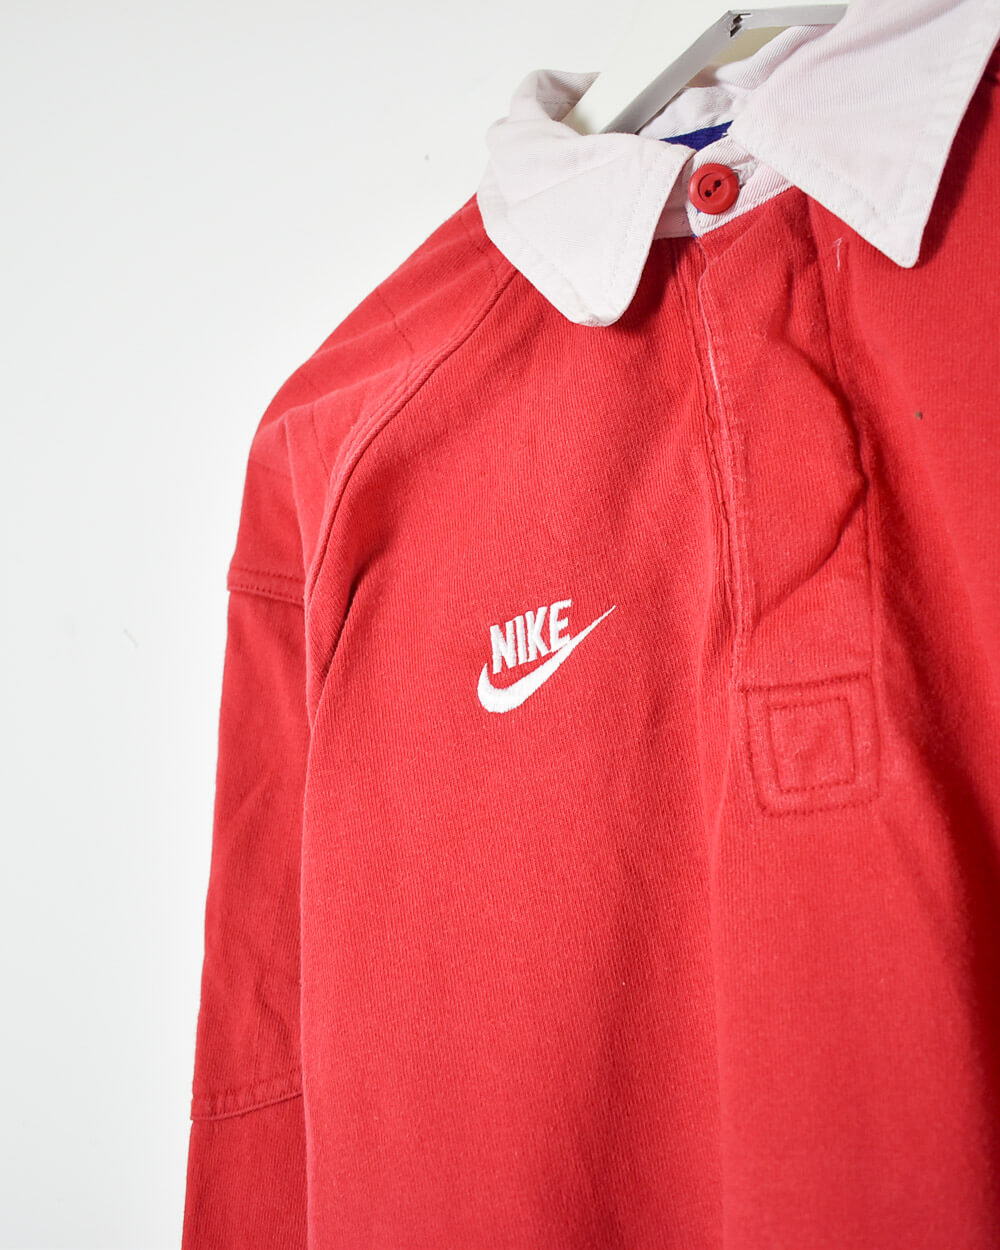 Red Nike Rugby Shirt - Medium